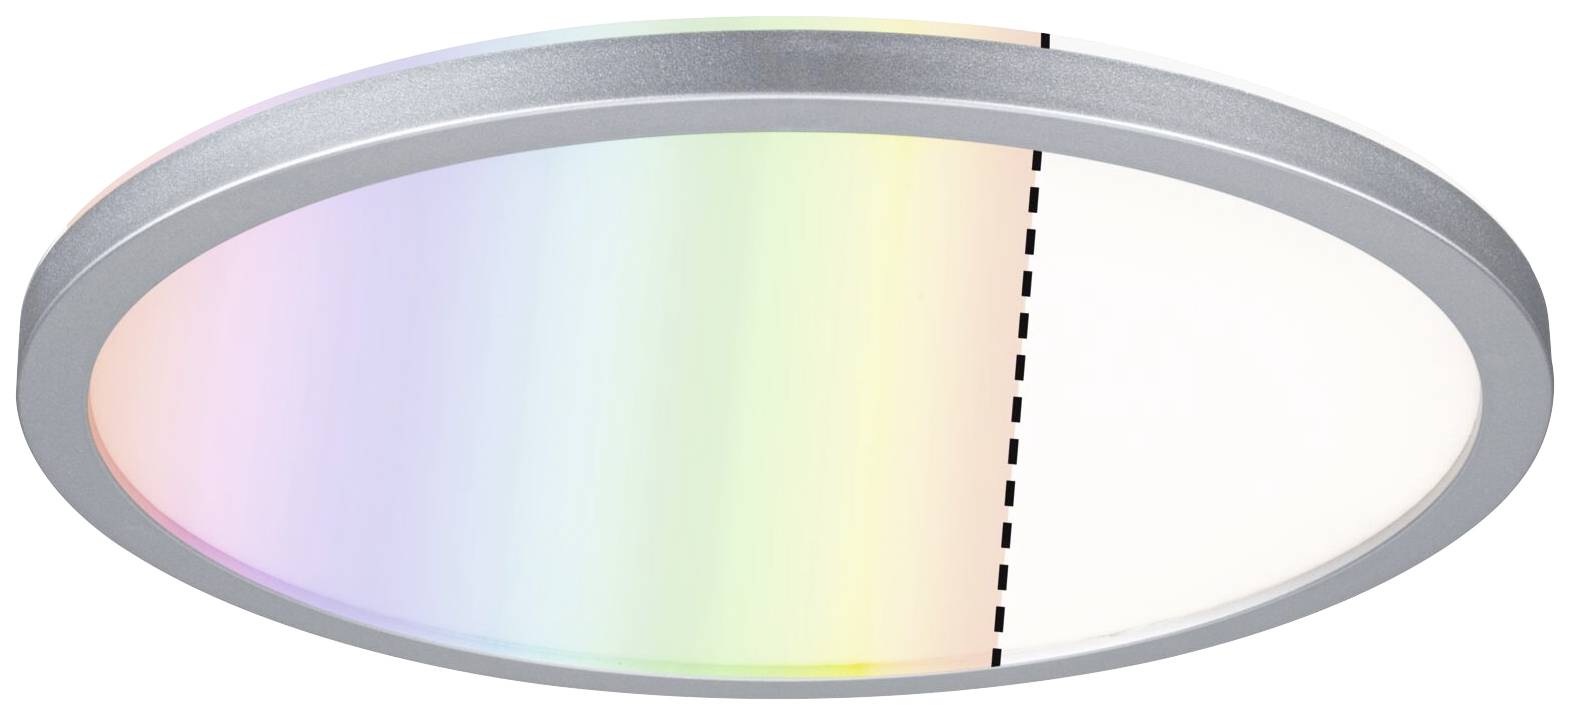 PAULMANN P Atria Shine 12W RGBW 293mm chr mt Ks 71018 LED-Deckenleuchte Chrom (matt) 12 W RGBW